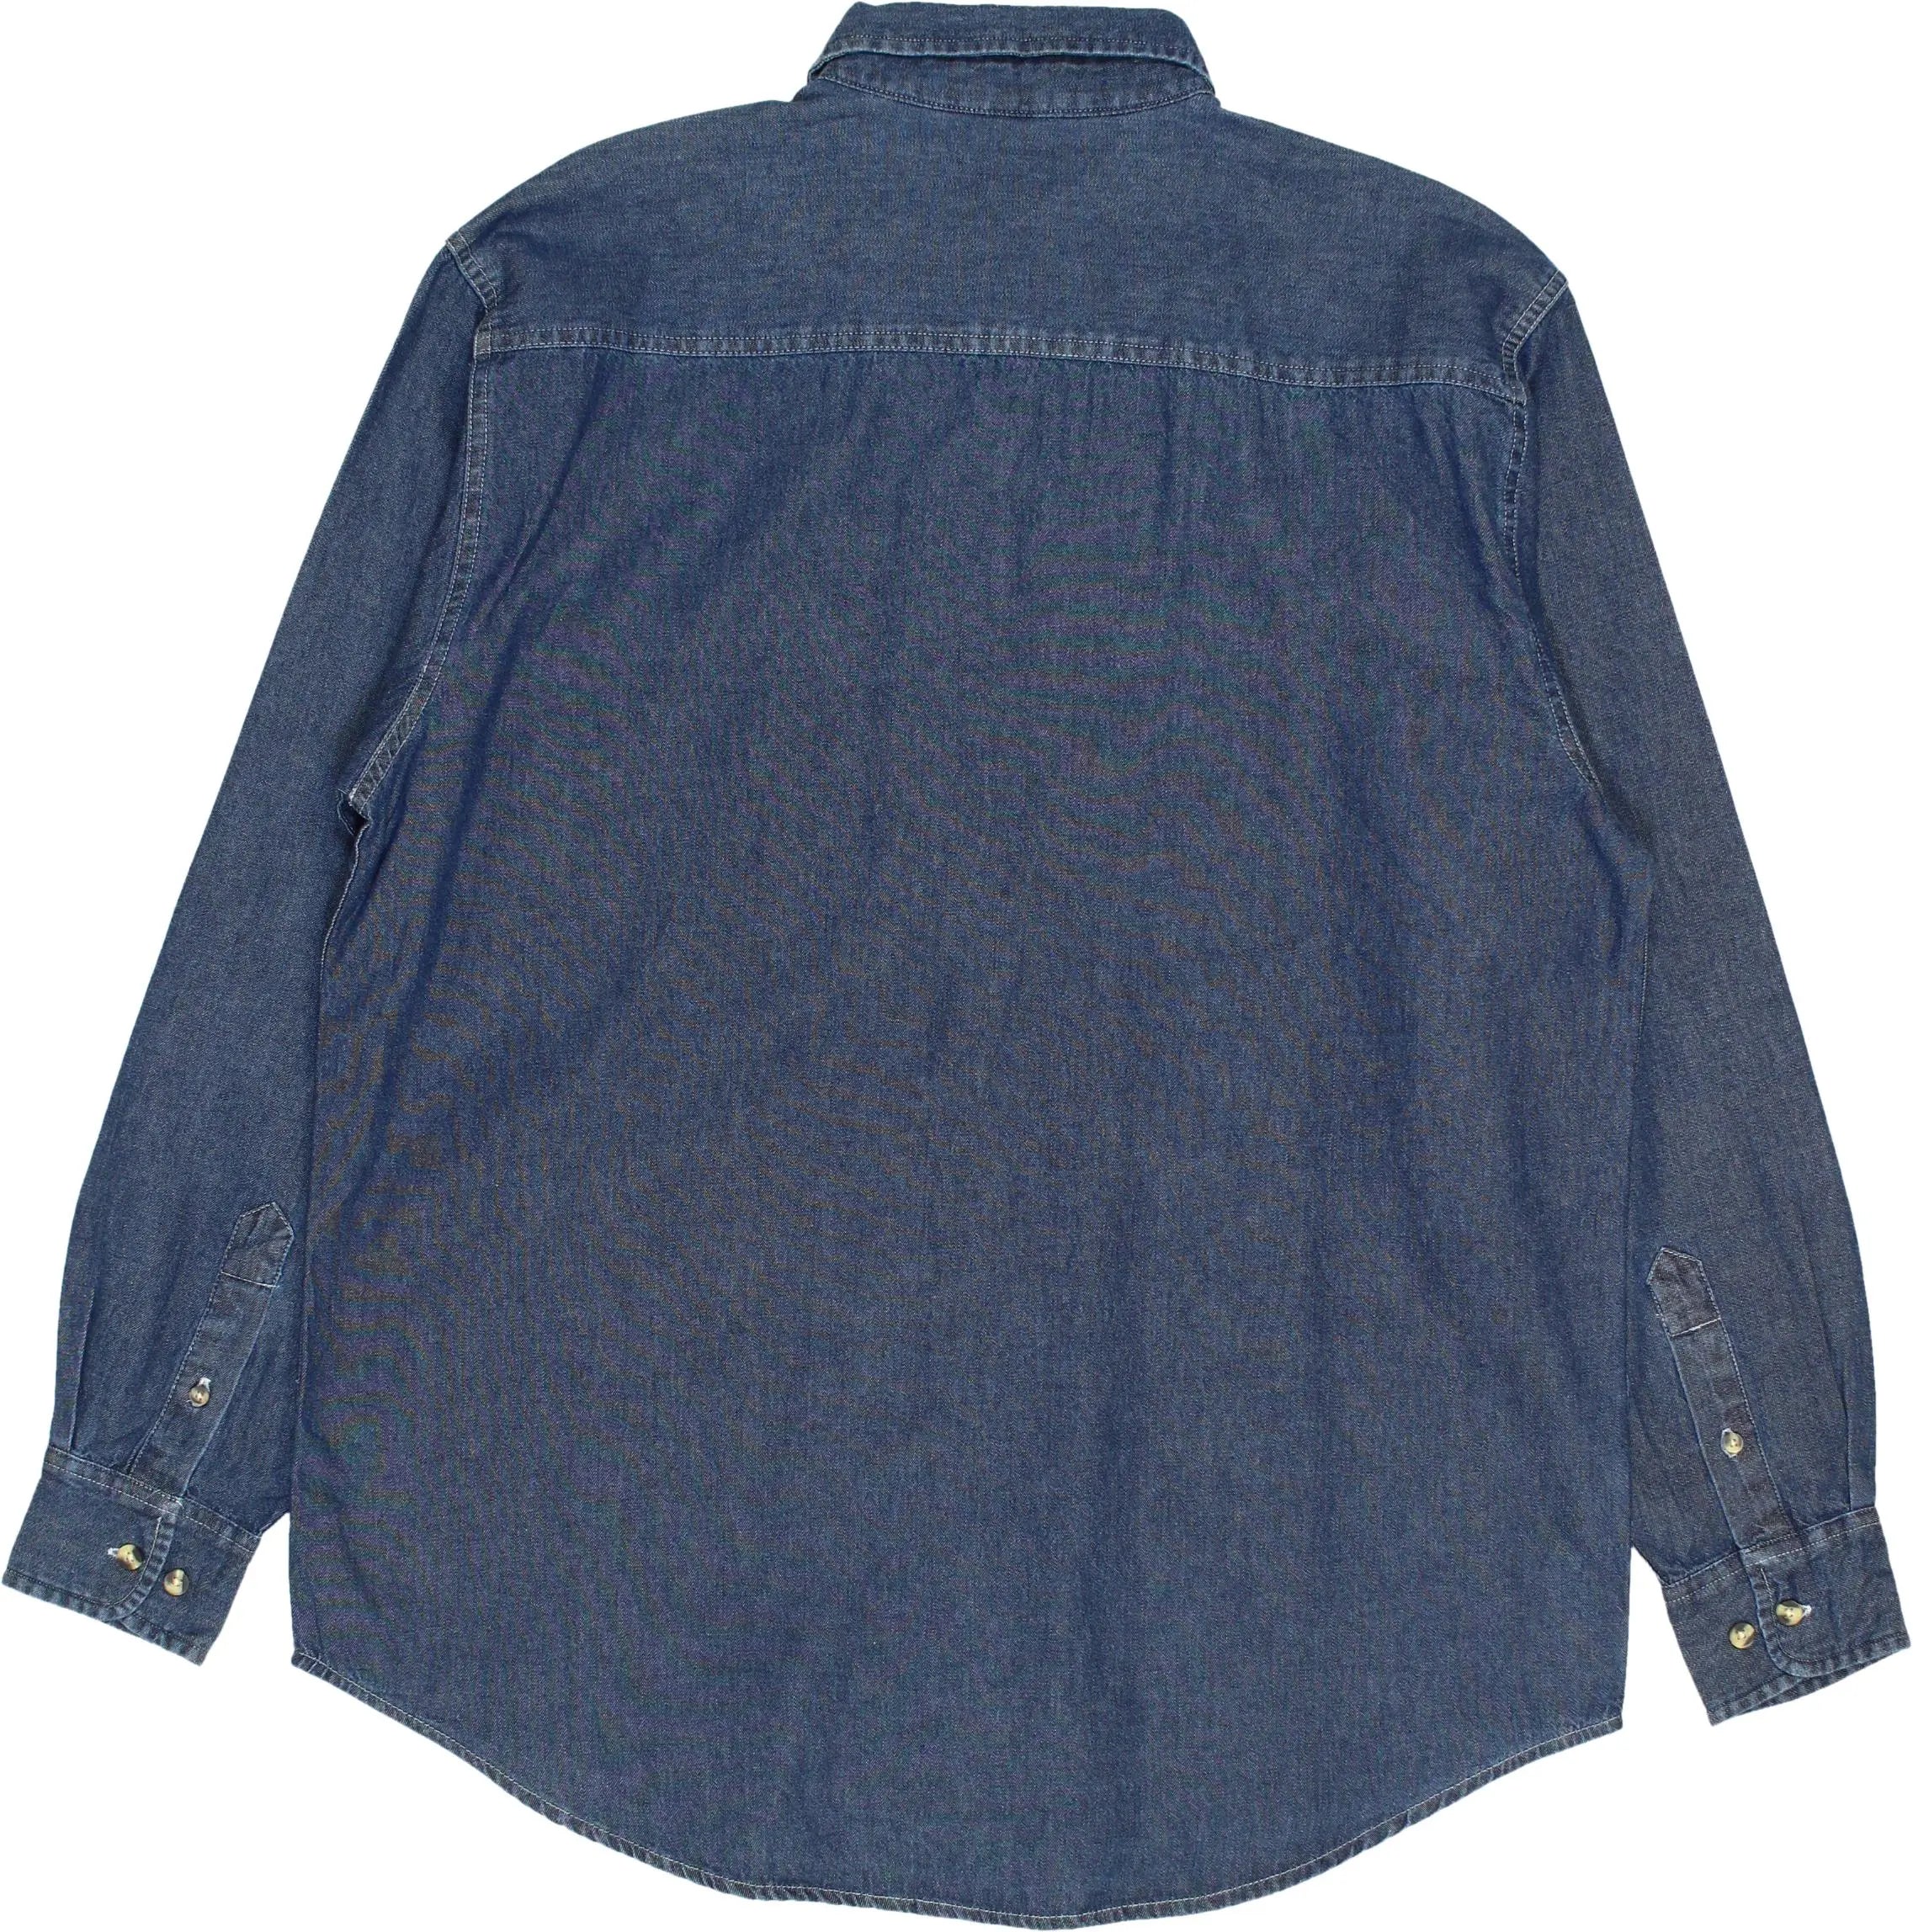 Port & Company - Denim Shirt- ThriftTale.com - Vintage and second handclothing